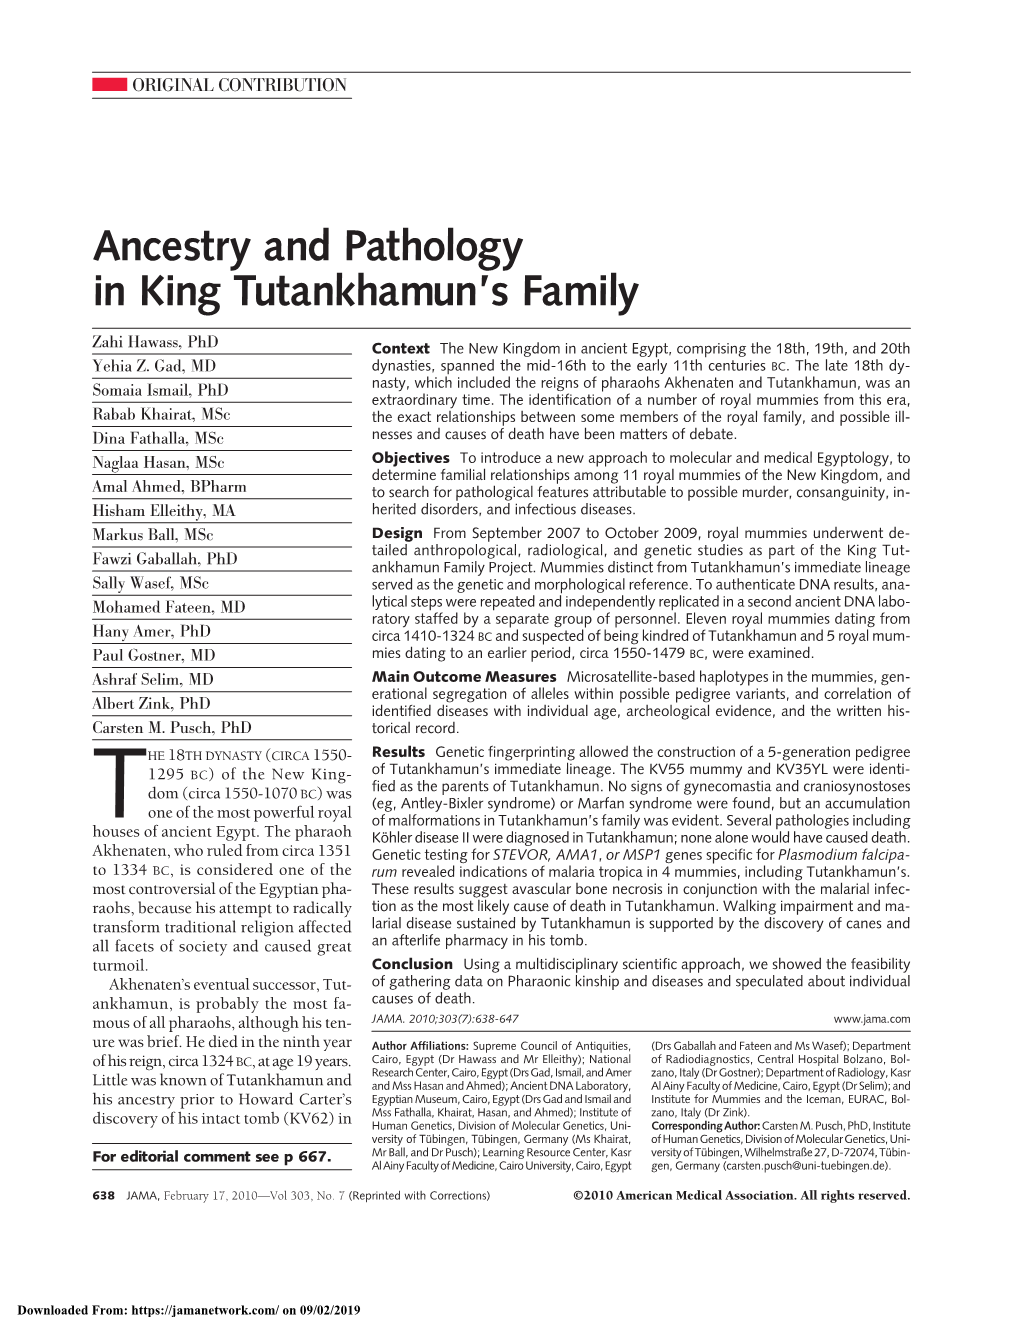 Ancestry and Pathology in King Tutankhamun's Family